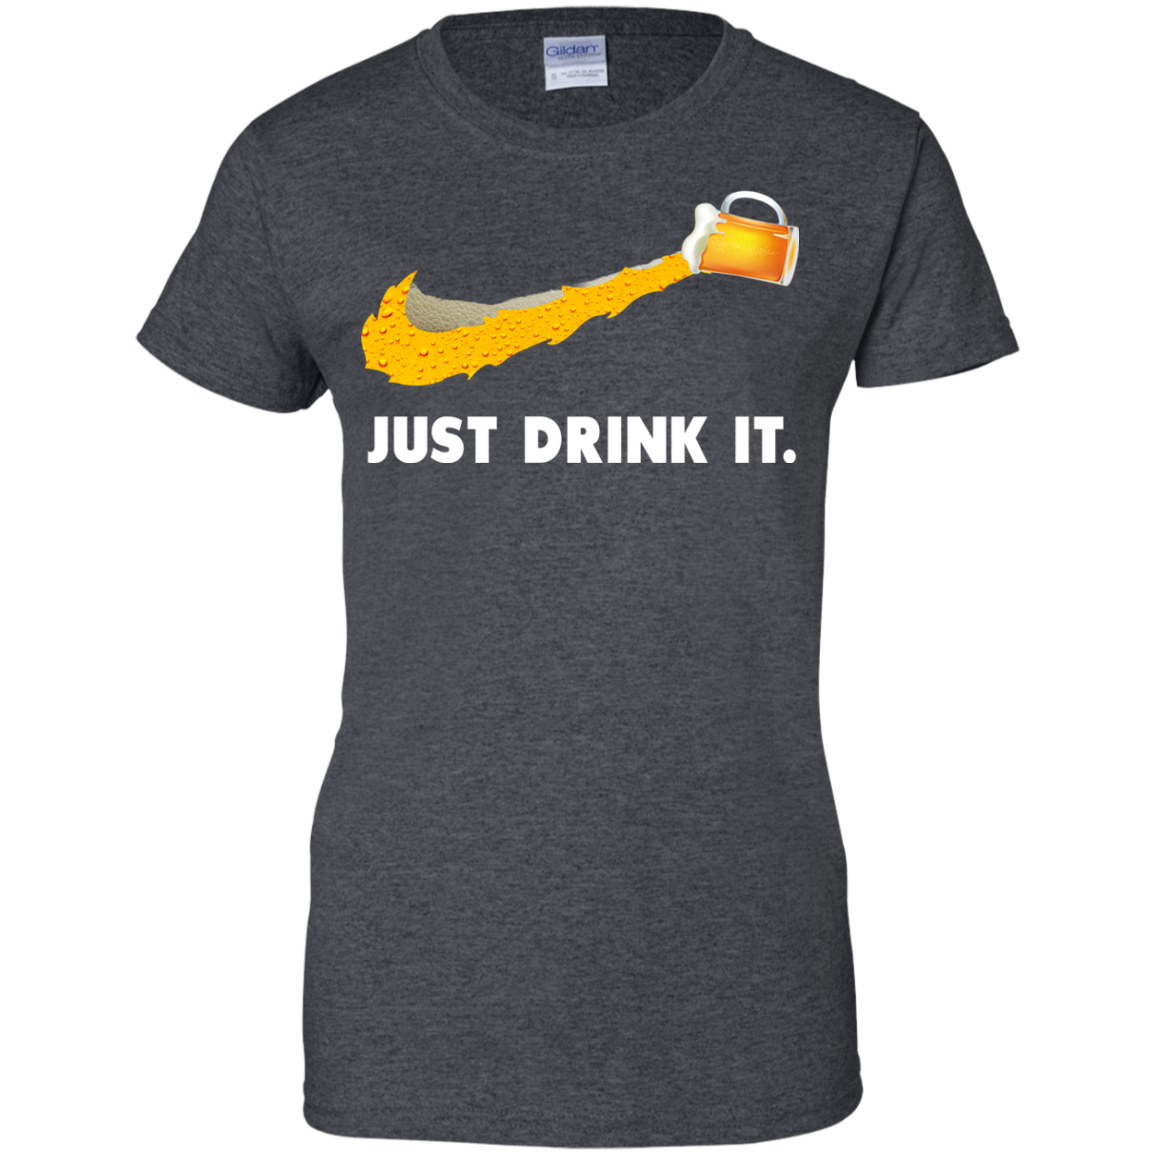 Love Beer: Just Drink It Nike Logo T-Shirts, Hoodies, Tank Top - Funny Nike Logos